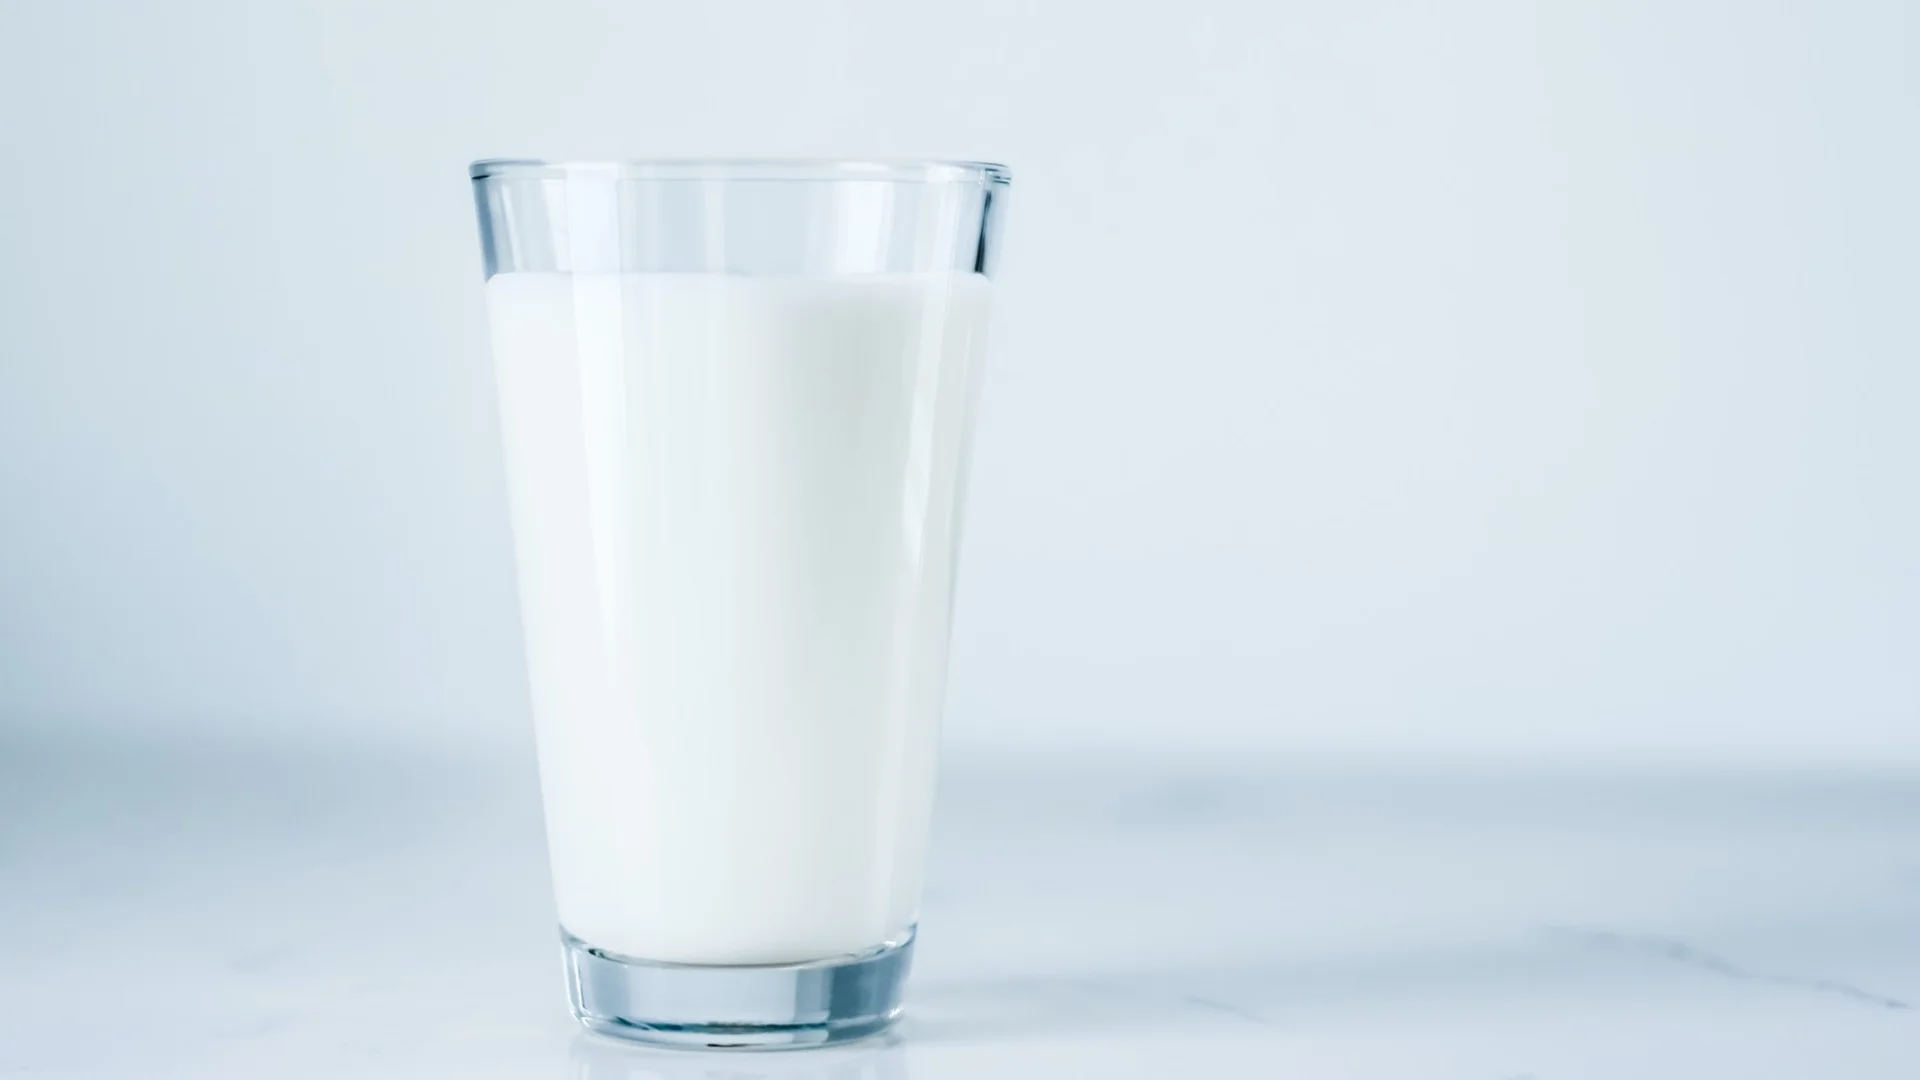 1 cup of milk: 8 oz